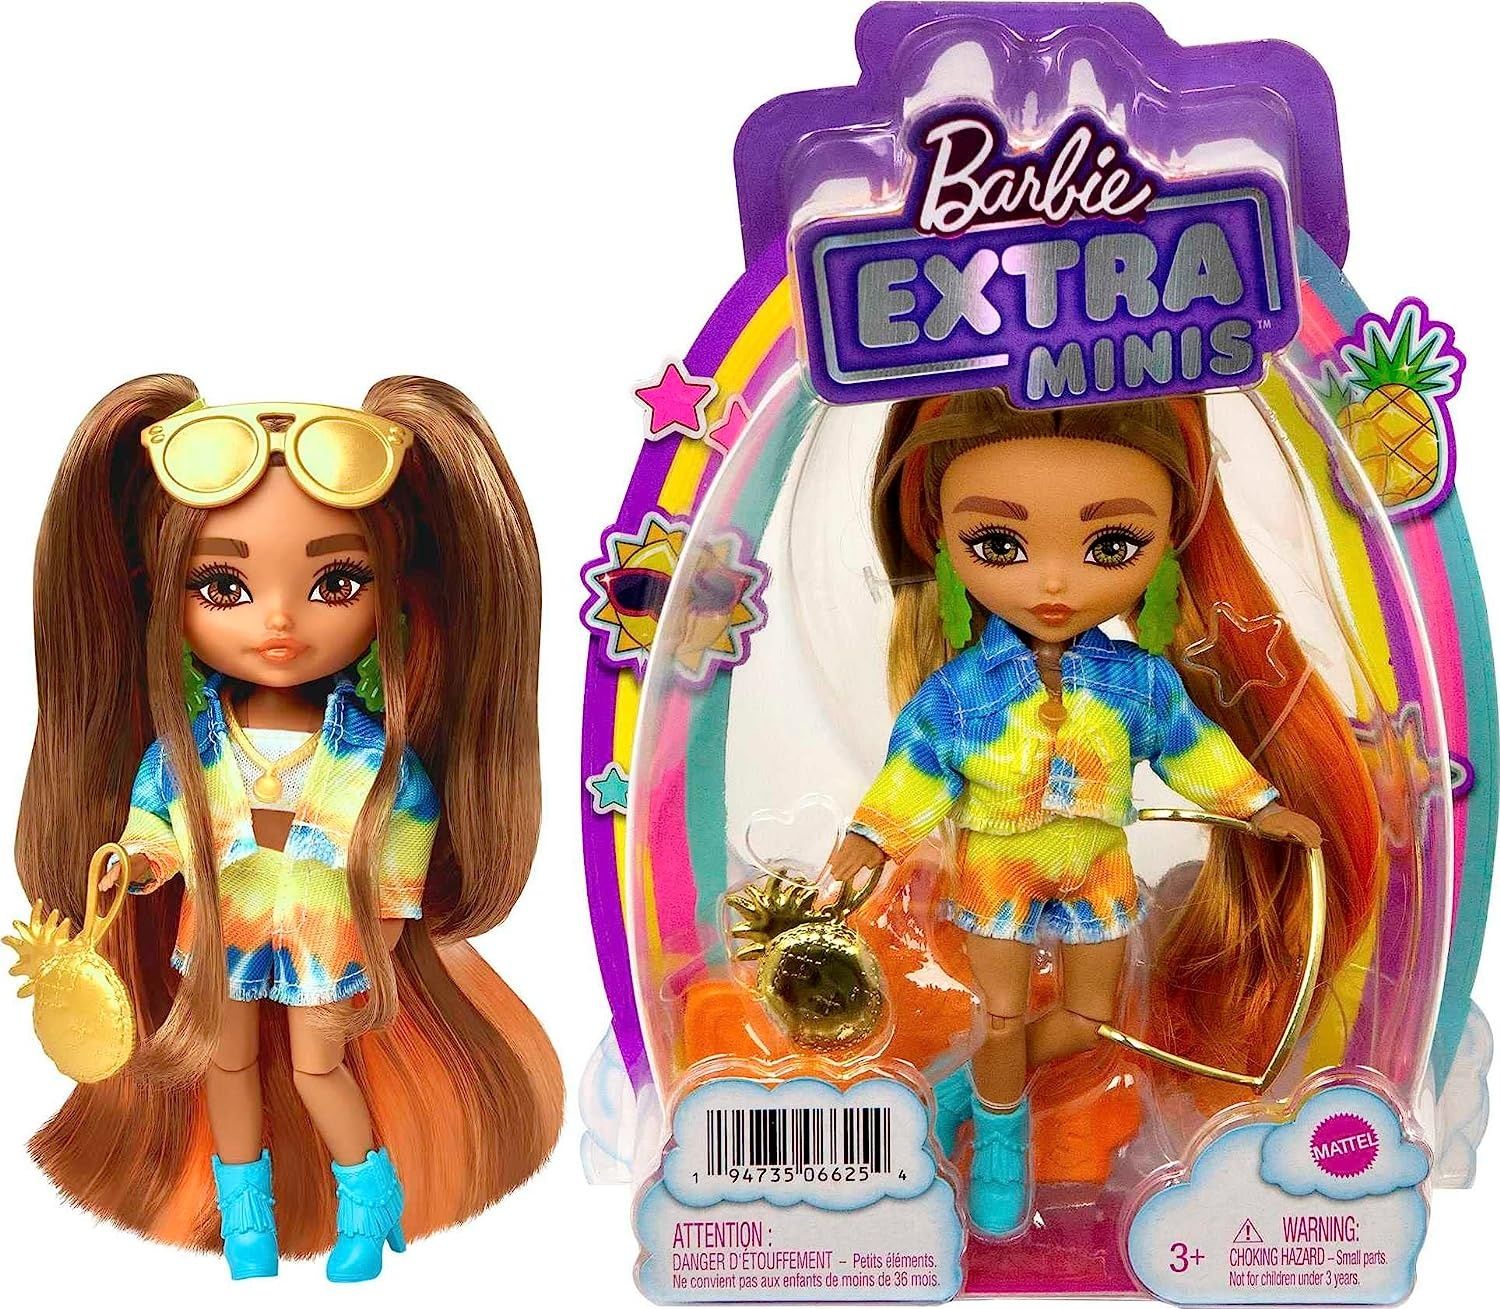 Кукла  Барби barbie Extra minis oригинал Mattel